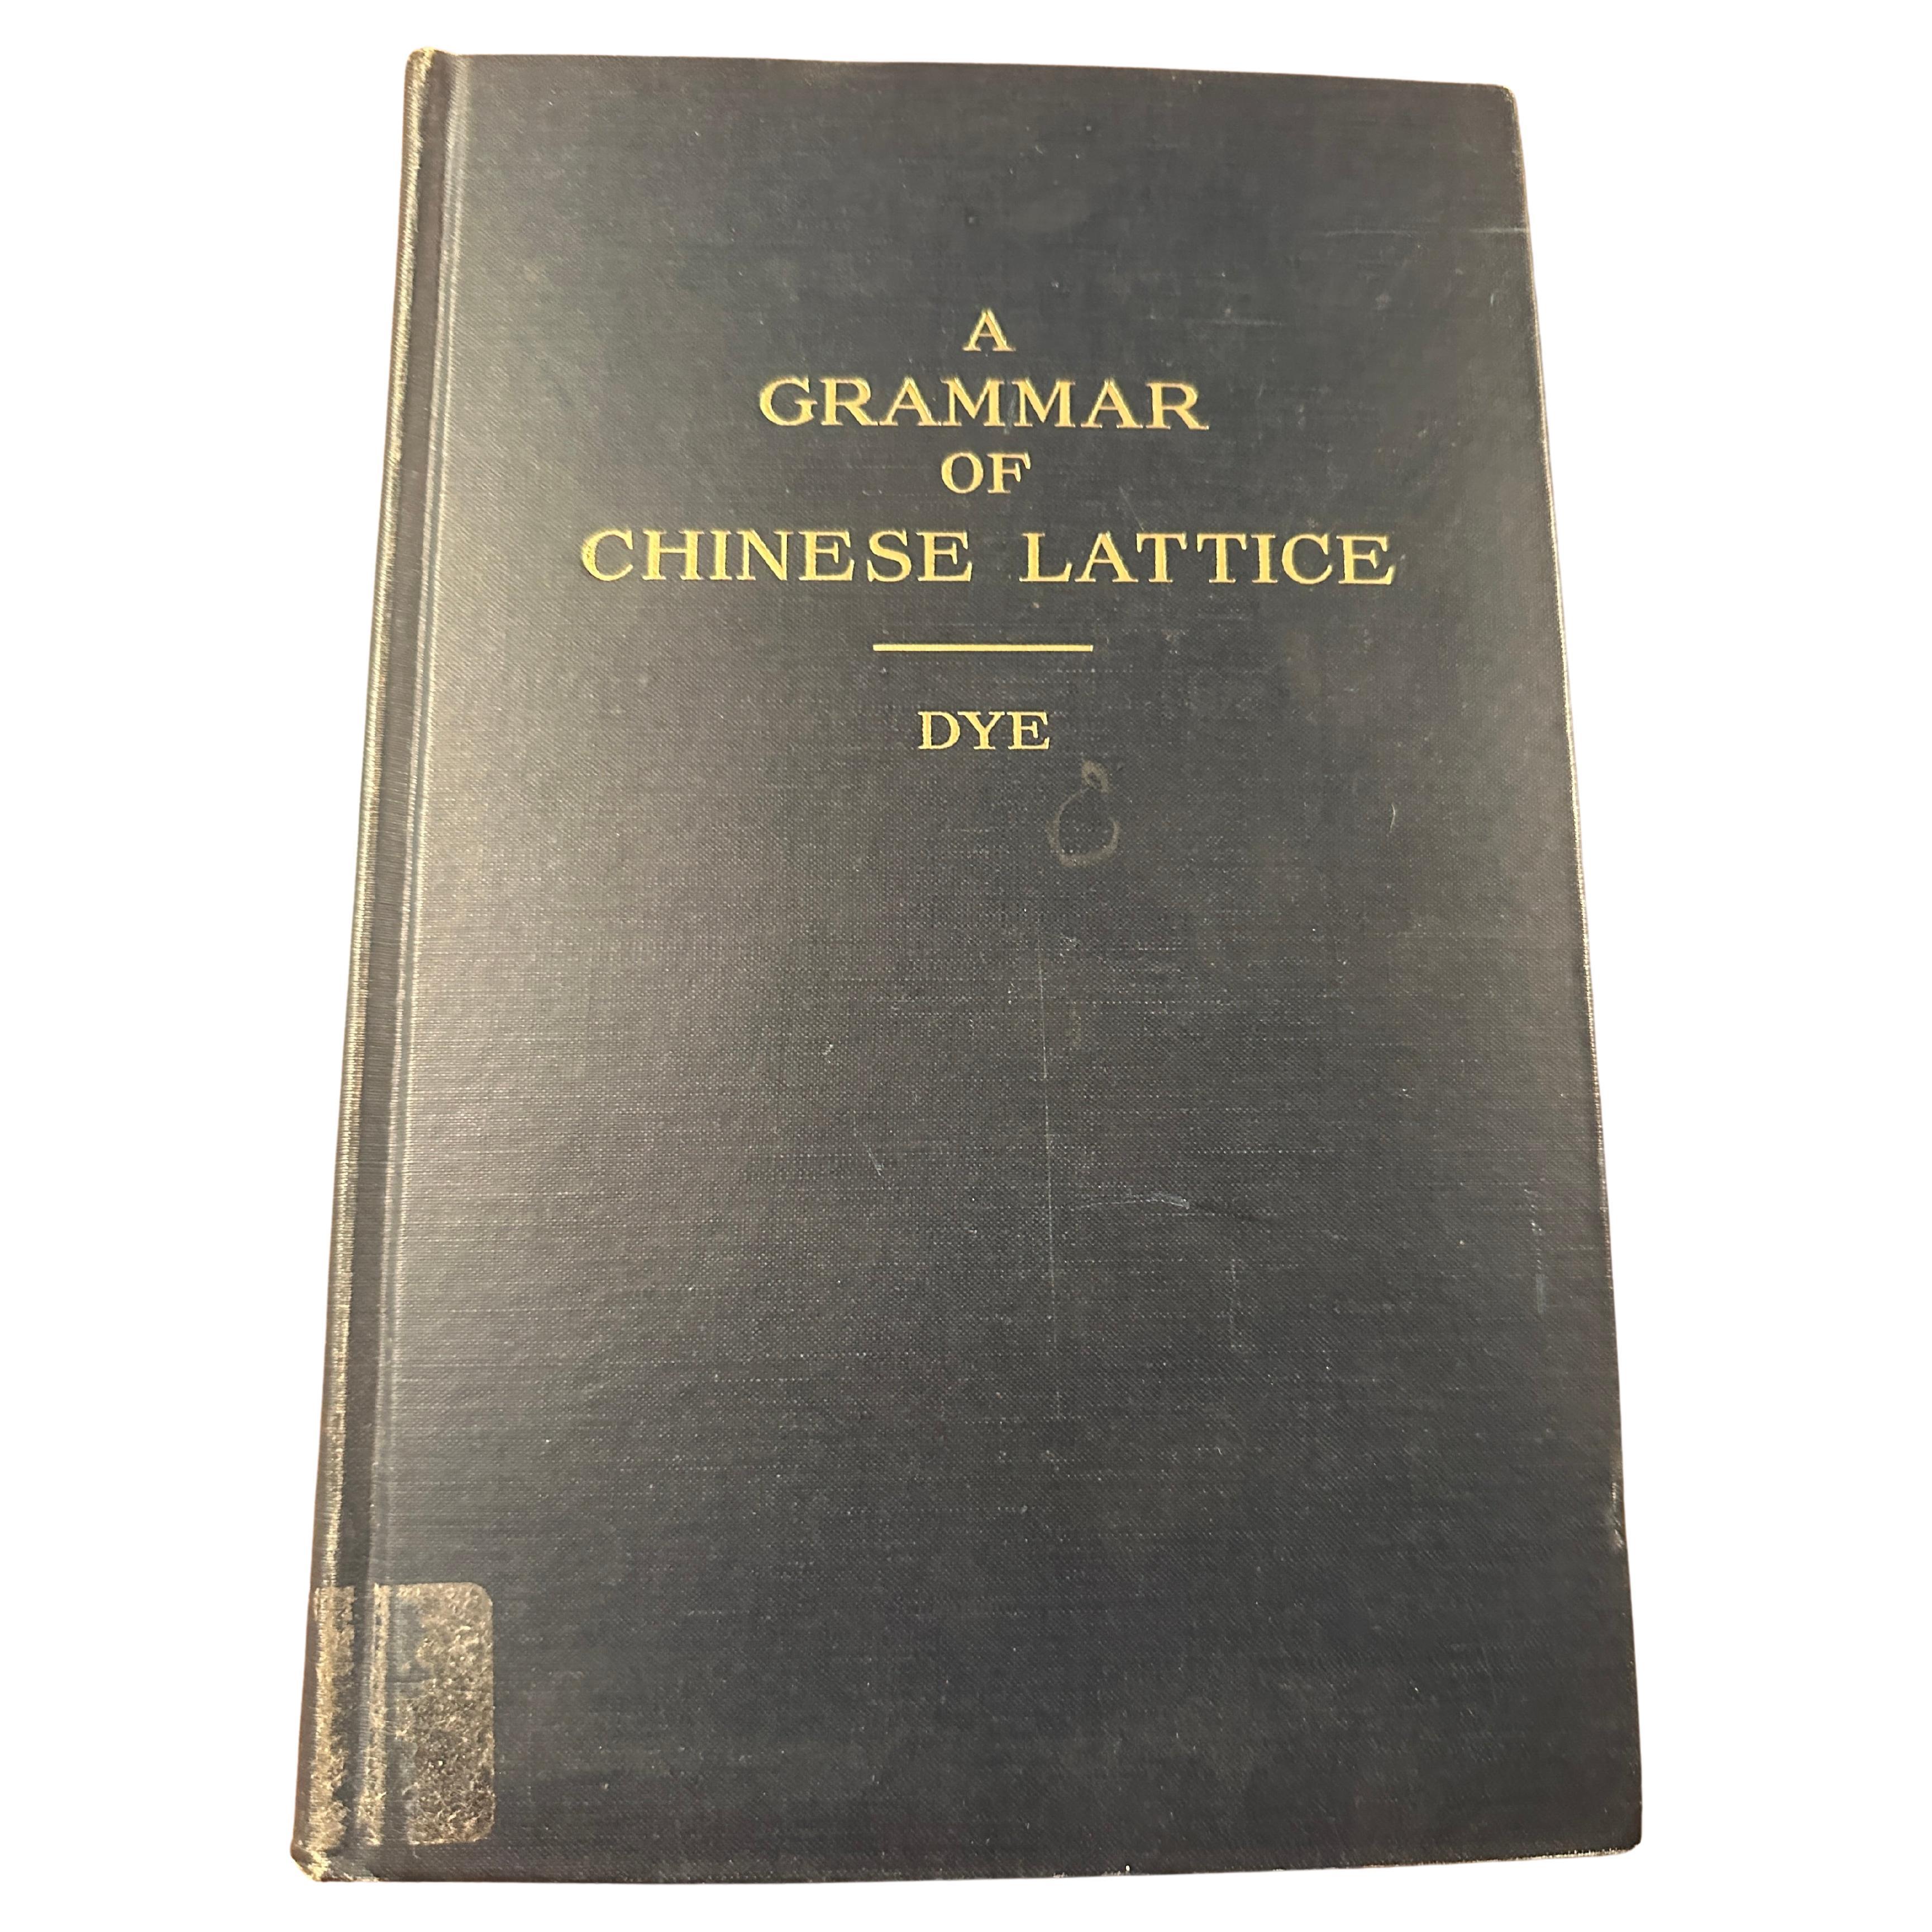 Gramar of Chinese Lattice by Daniel Sheets Dye, Harvard-Yenching Institute